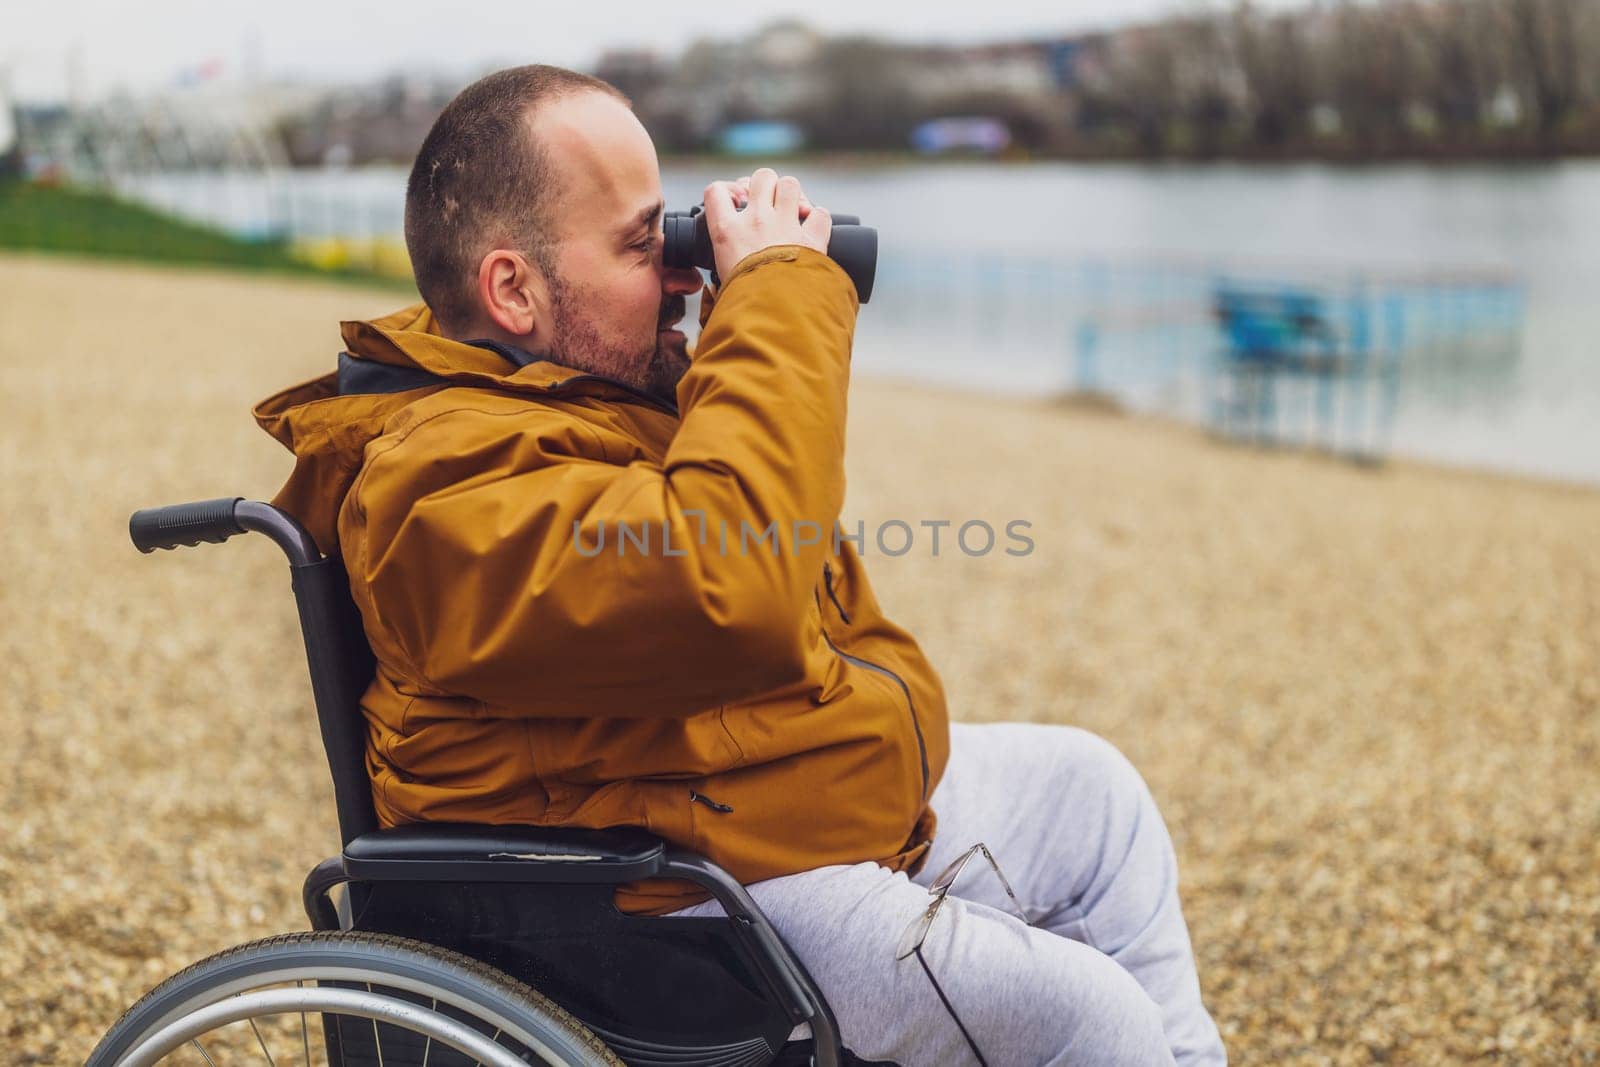 Paraplegic handicapped man in wheelchair is using binoculars outdoor by djoronimo